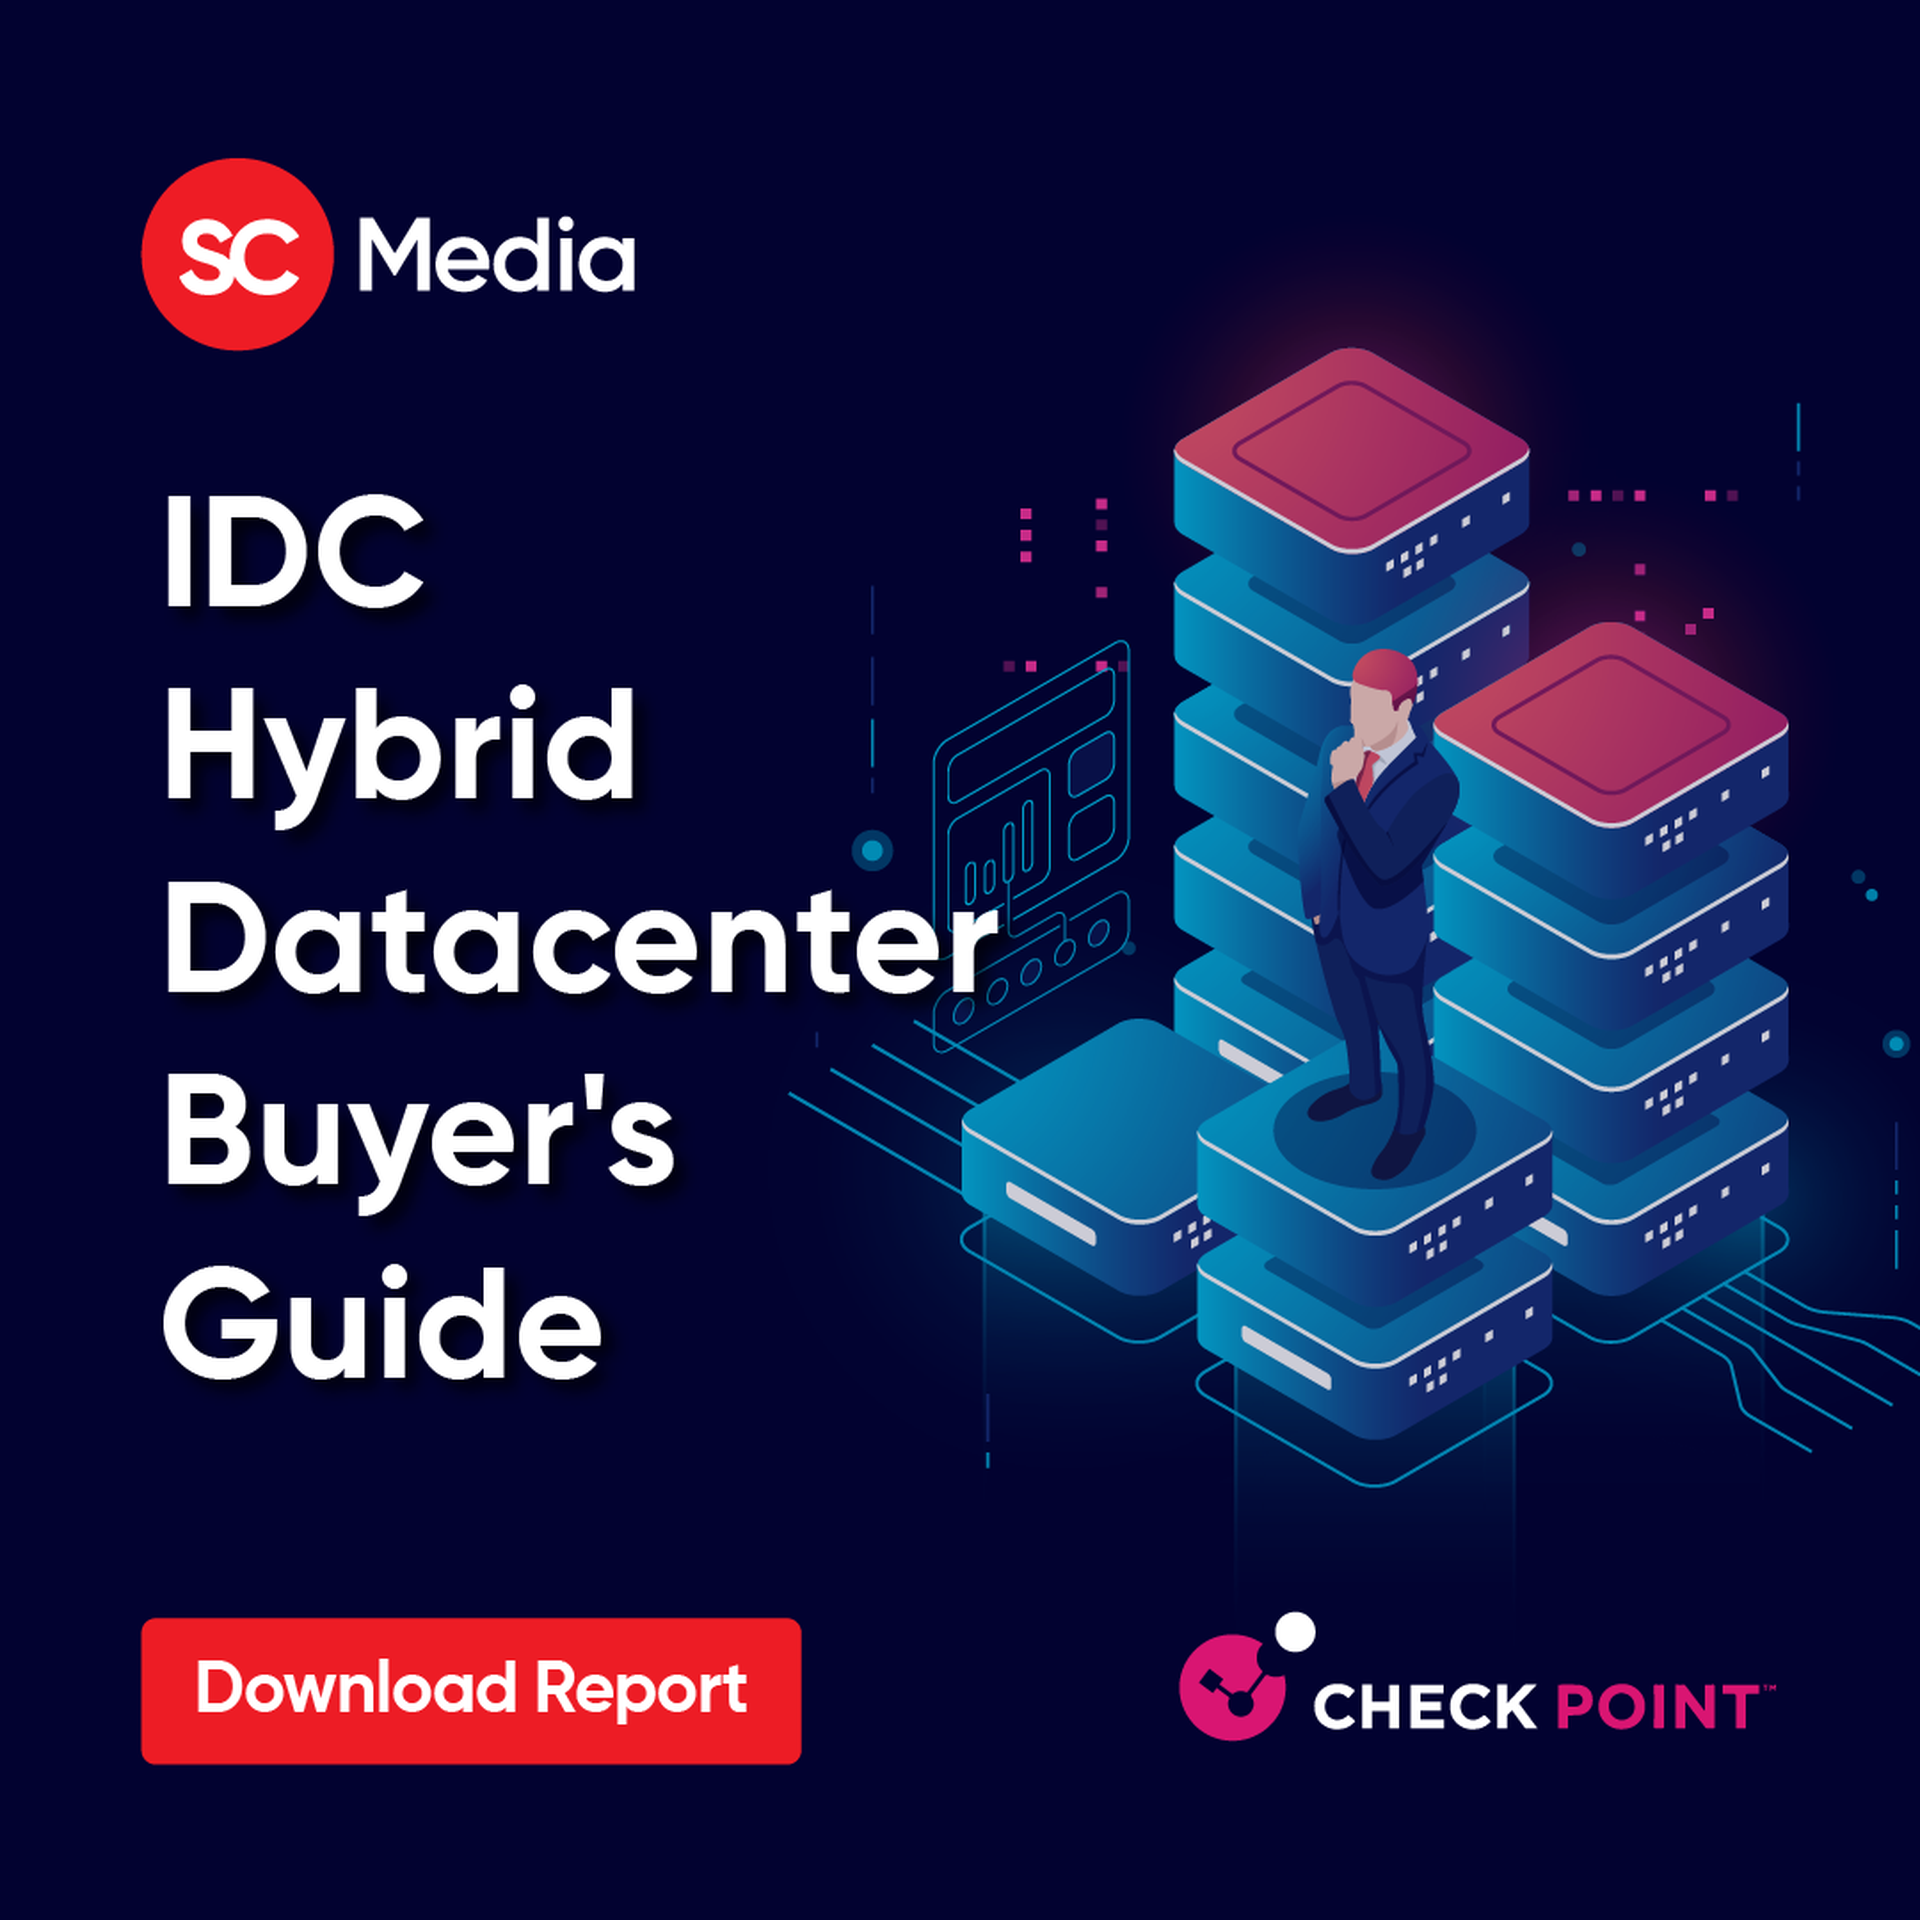 IDC Hybrid Datacenter Buyer’s Guide